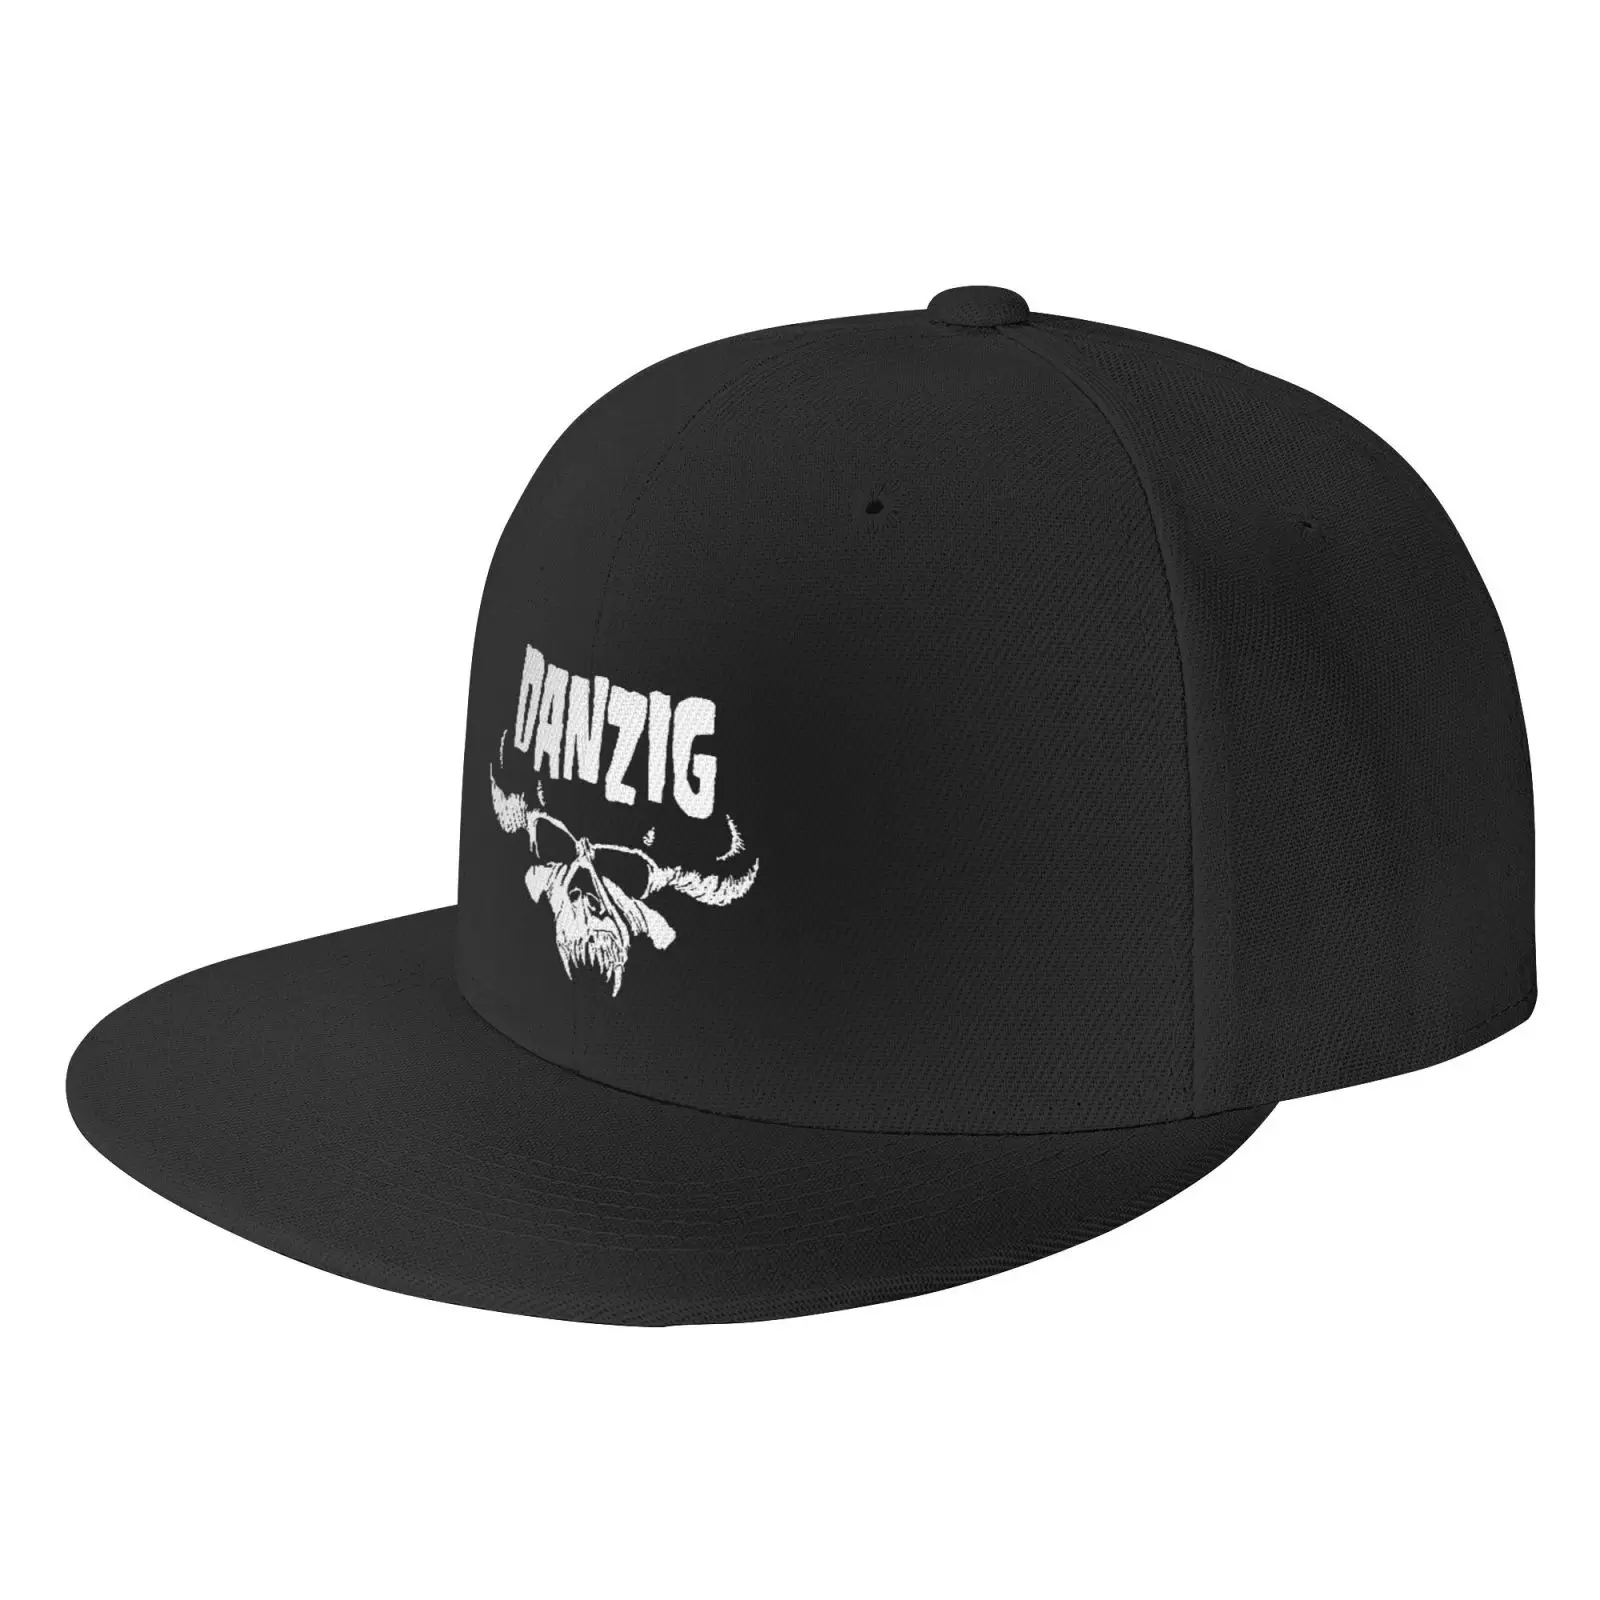 Danzig Hiphop Baseball Cap Men Funny Flat Visor Sporter Fashion Caps Hats for Logo Homme Dad Hat Men Cap Casual